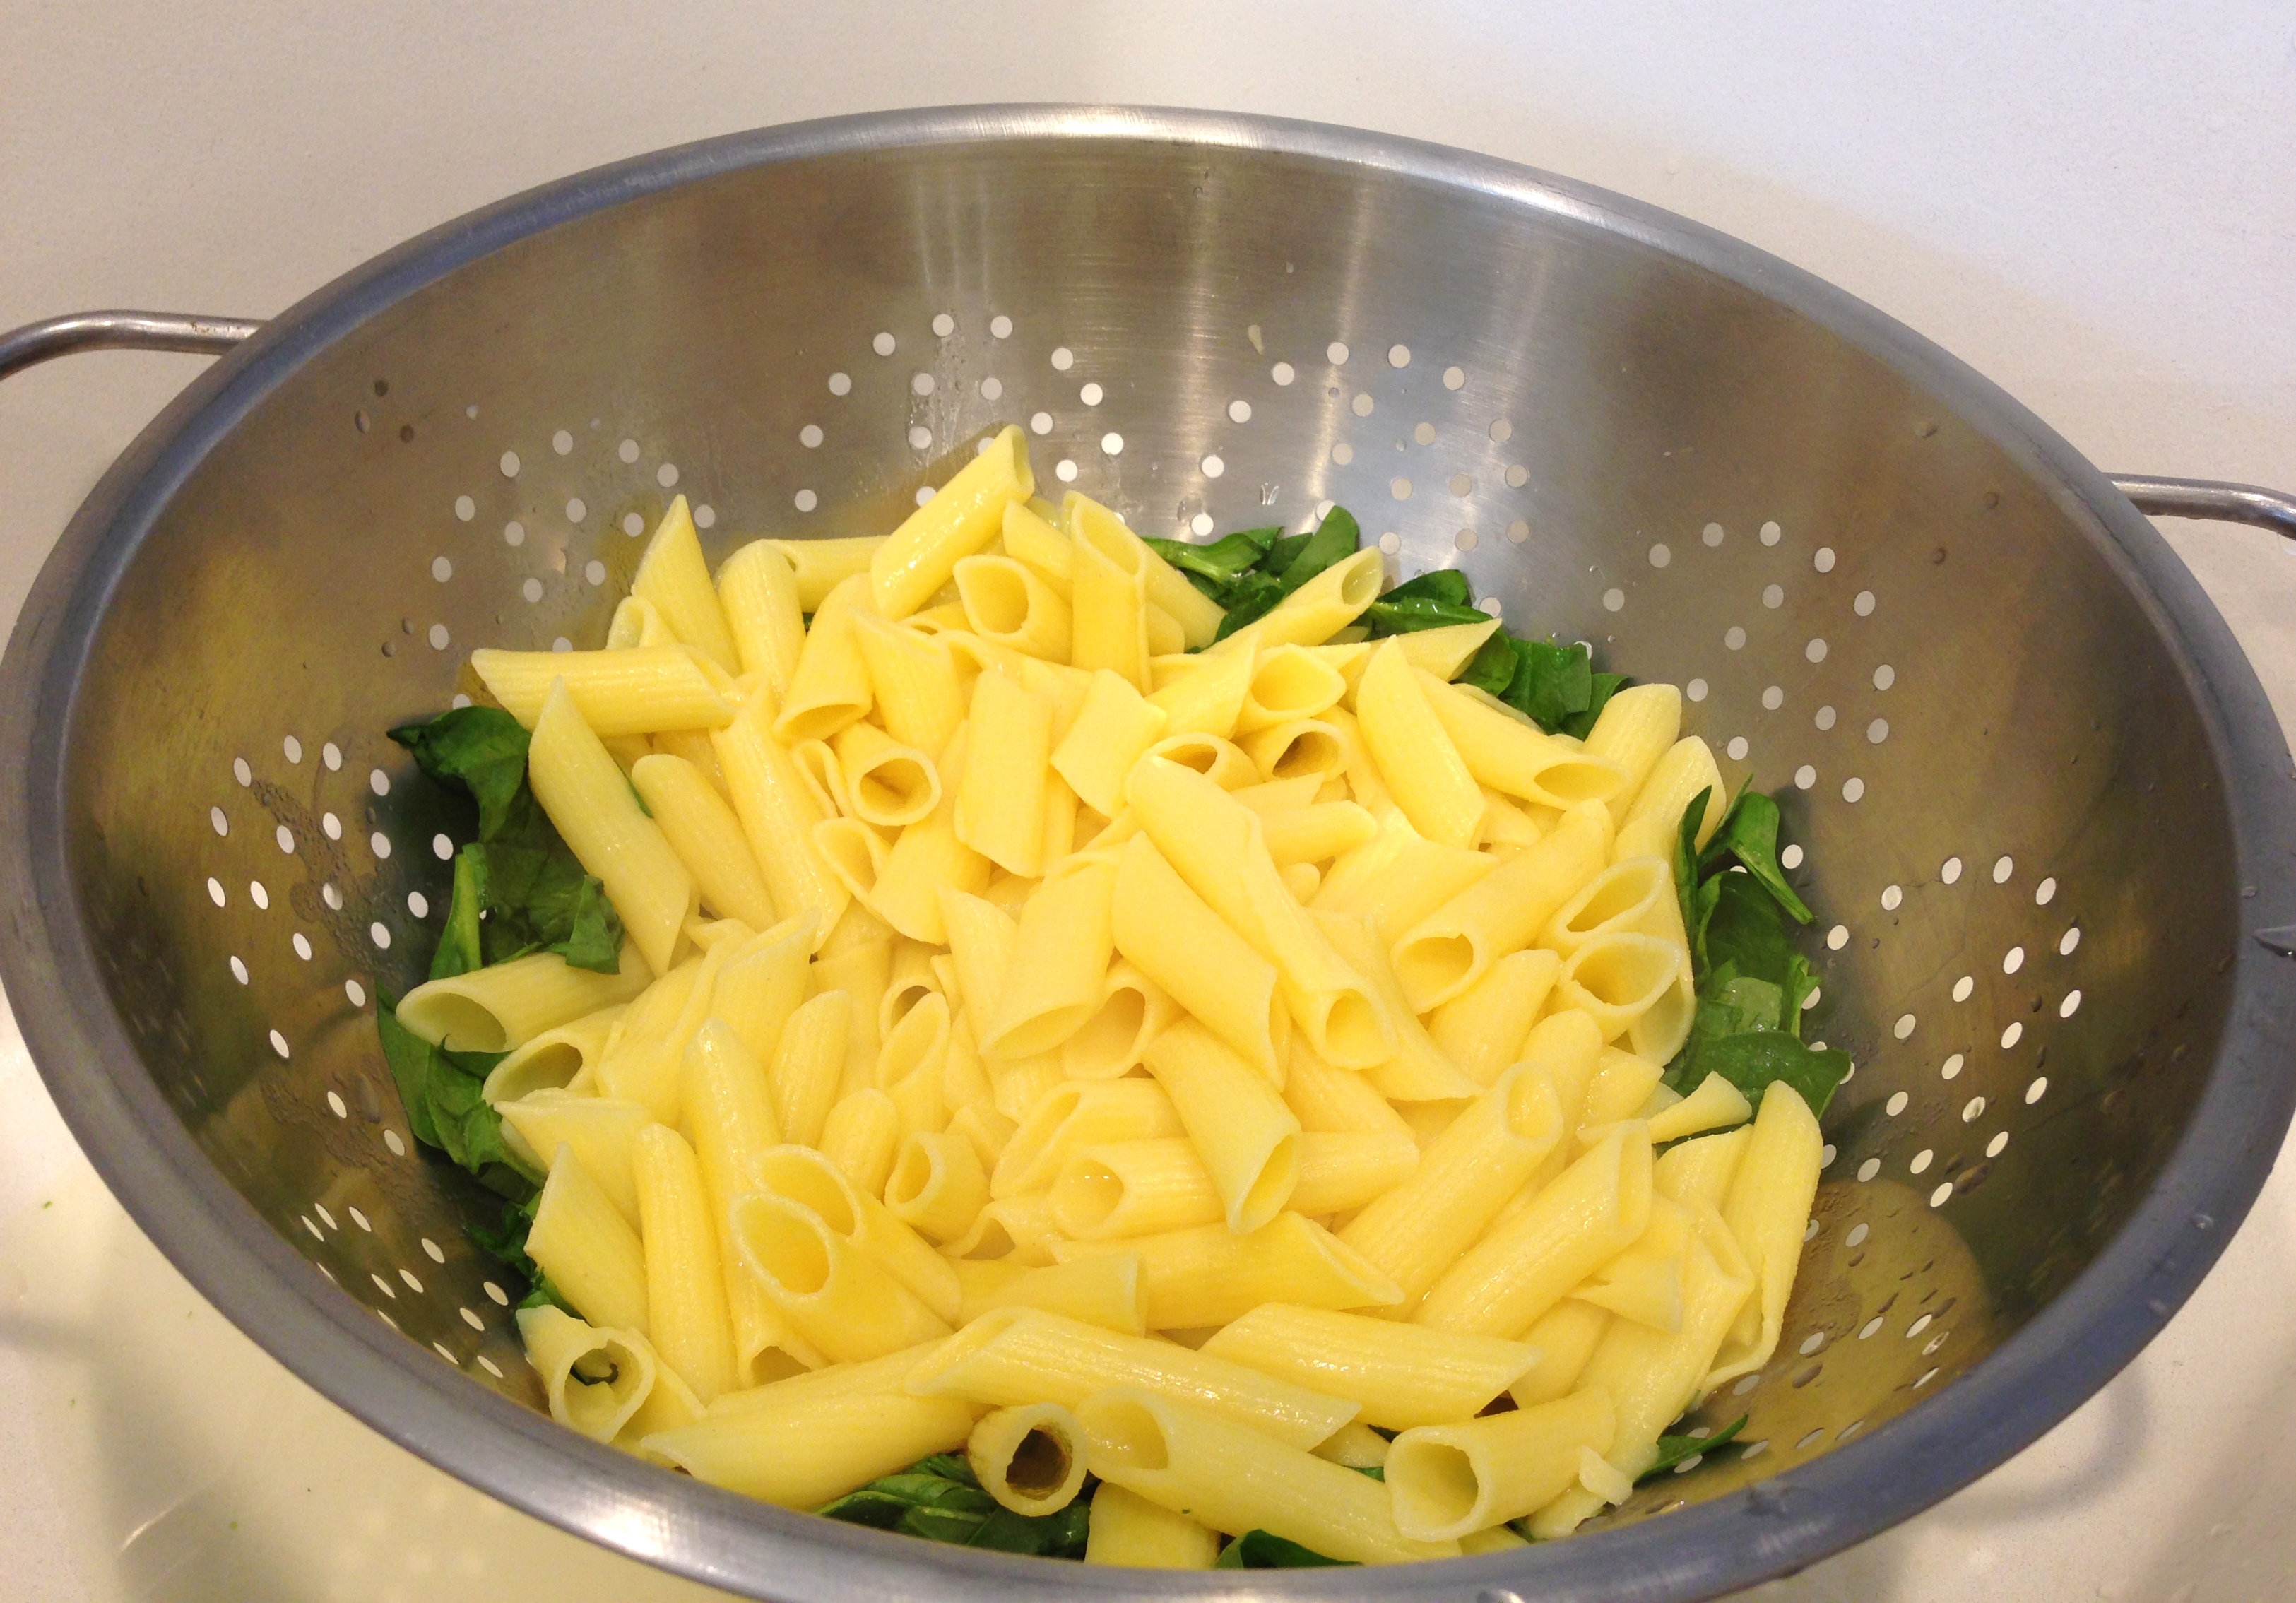 Drain pasta over spinach